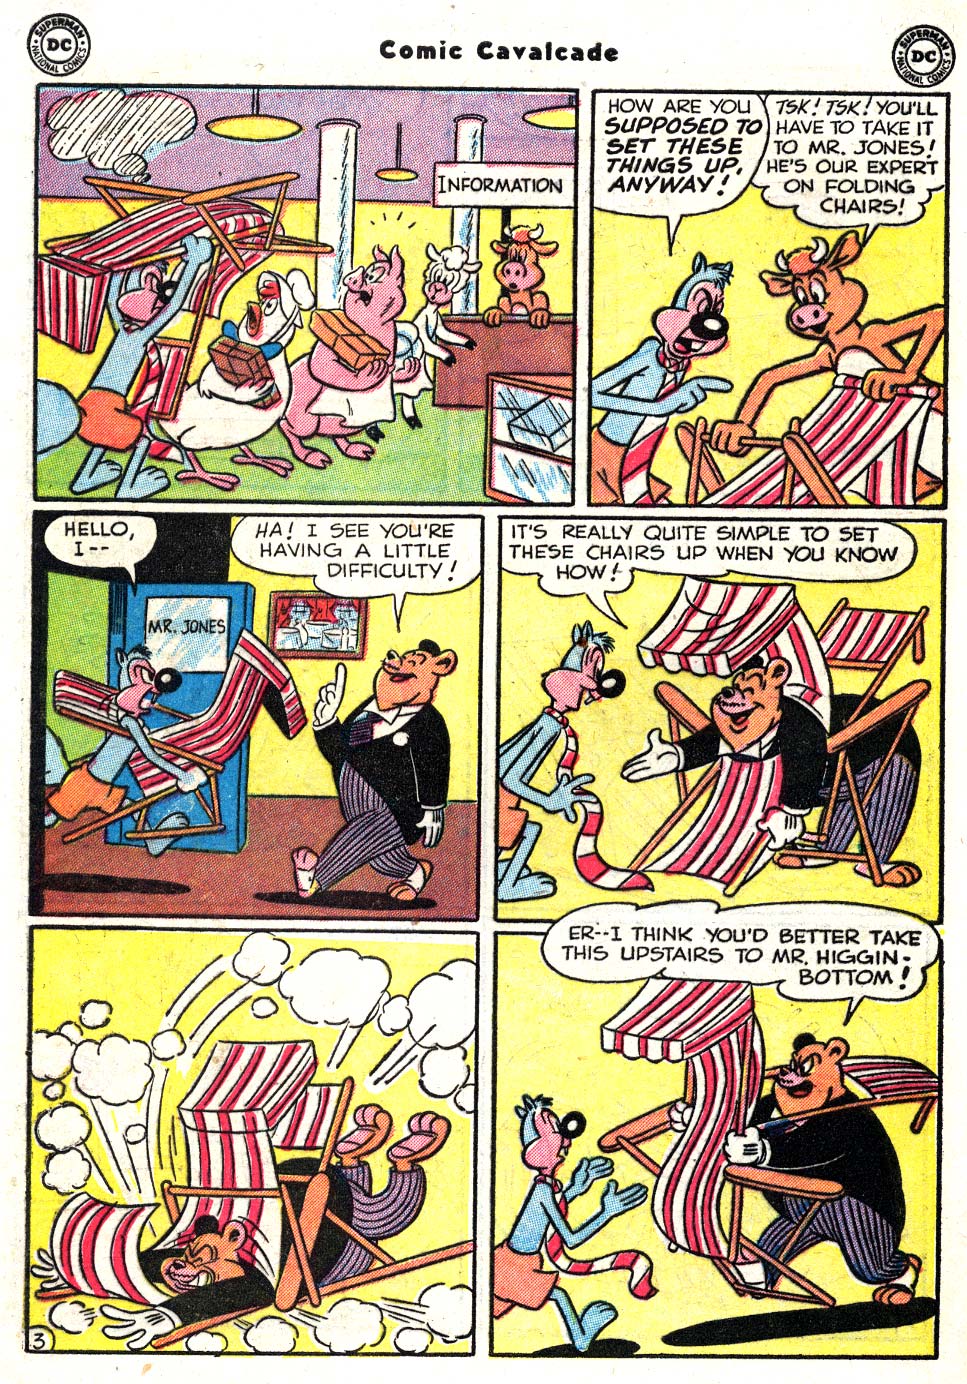 Comic Cavalcade issue 46 - Page 70